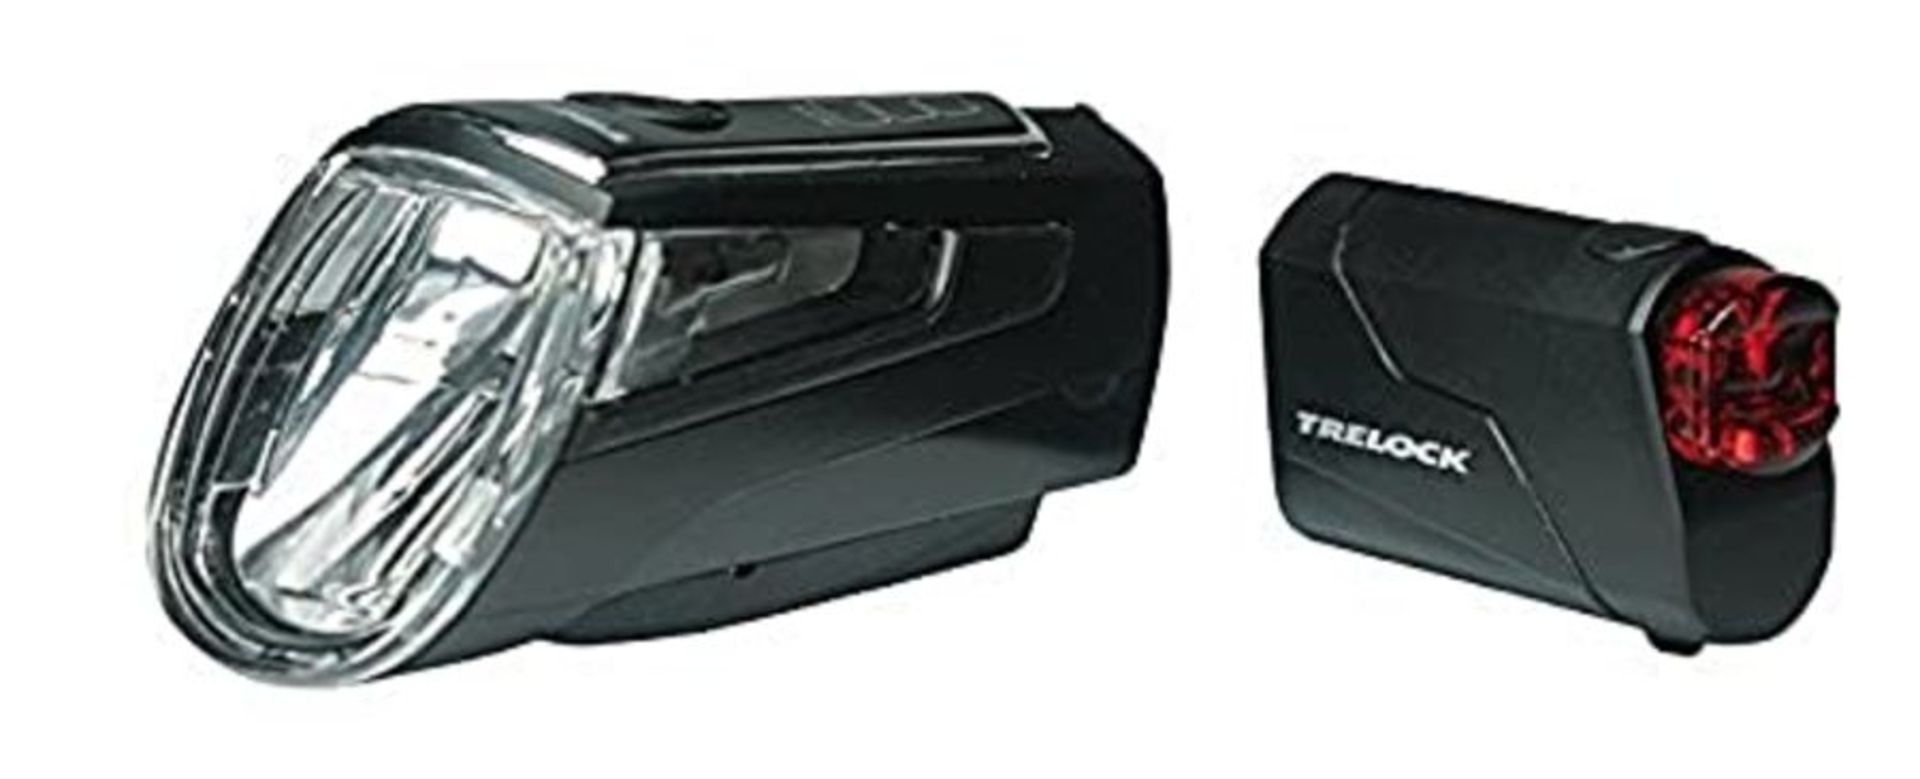 Trelock Batterie Beleuchtungsset LS 560 720 Schwarz Li-ion Set, Black, 10 x 5 x 3 cm